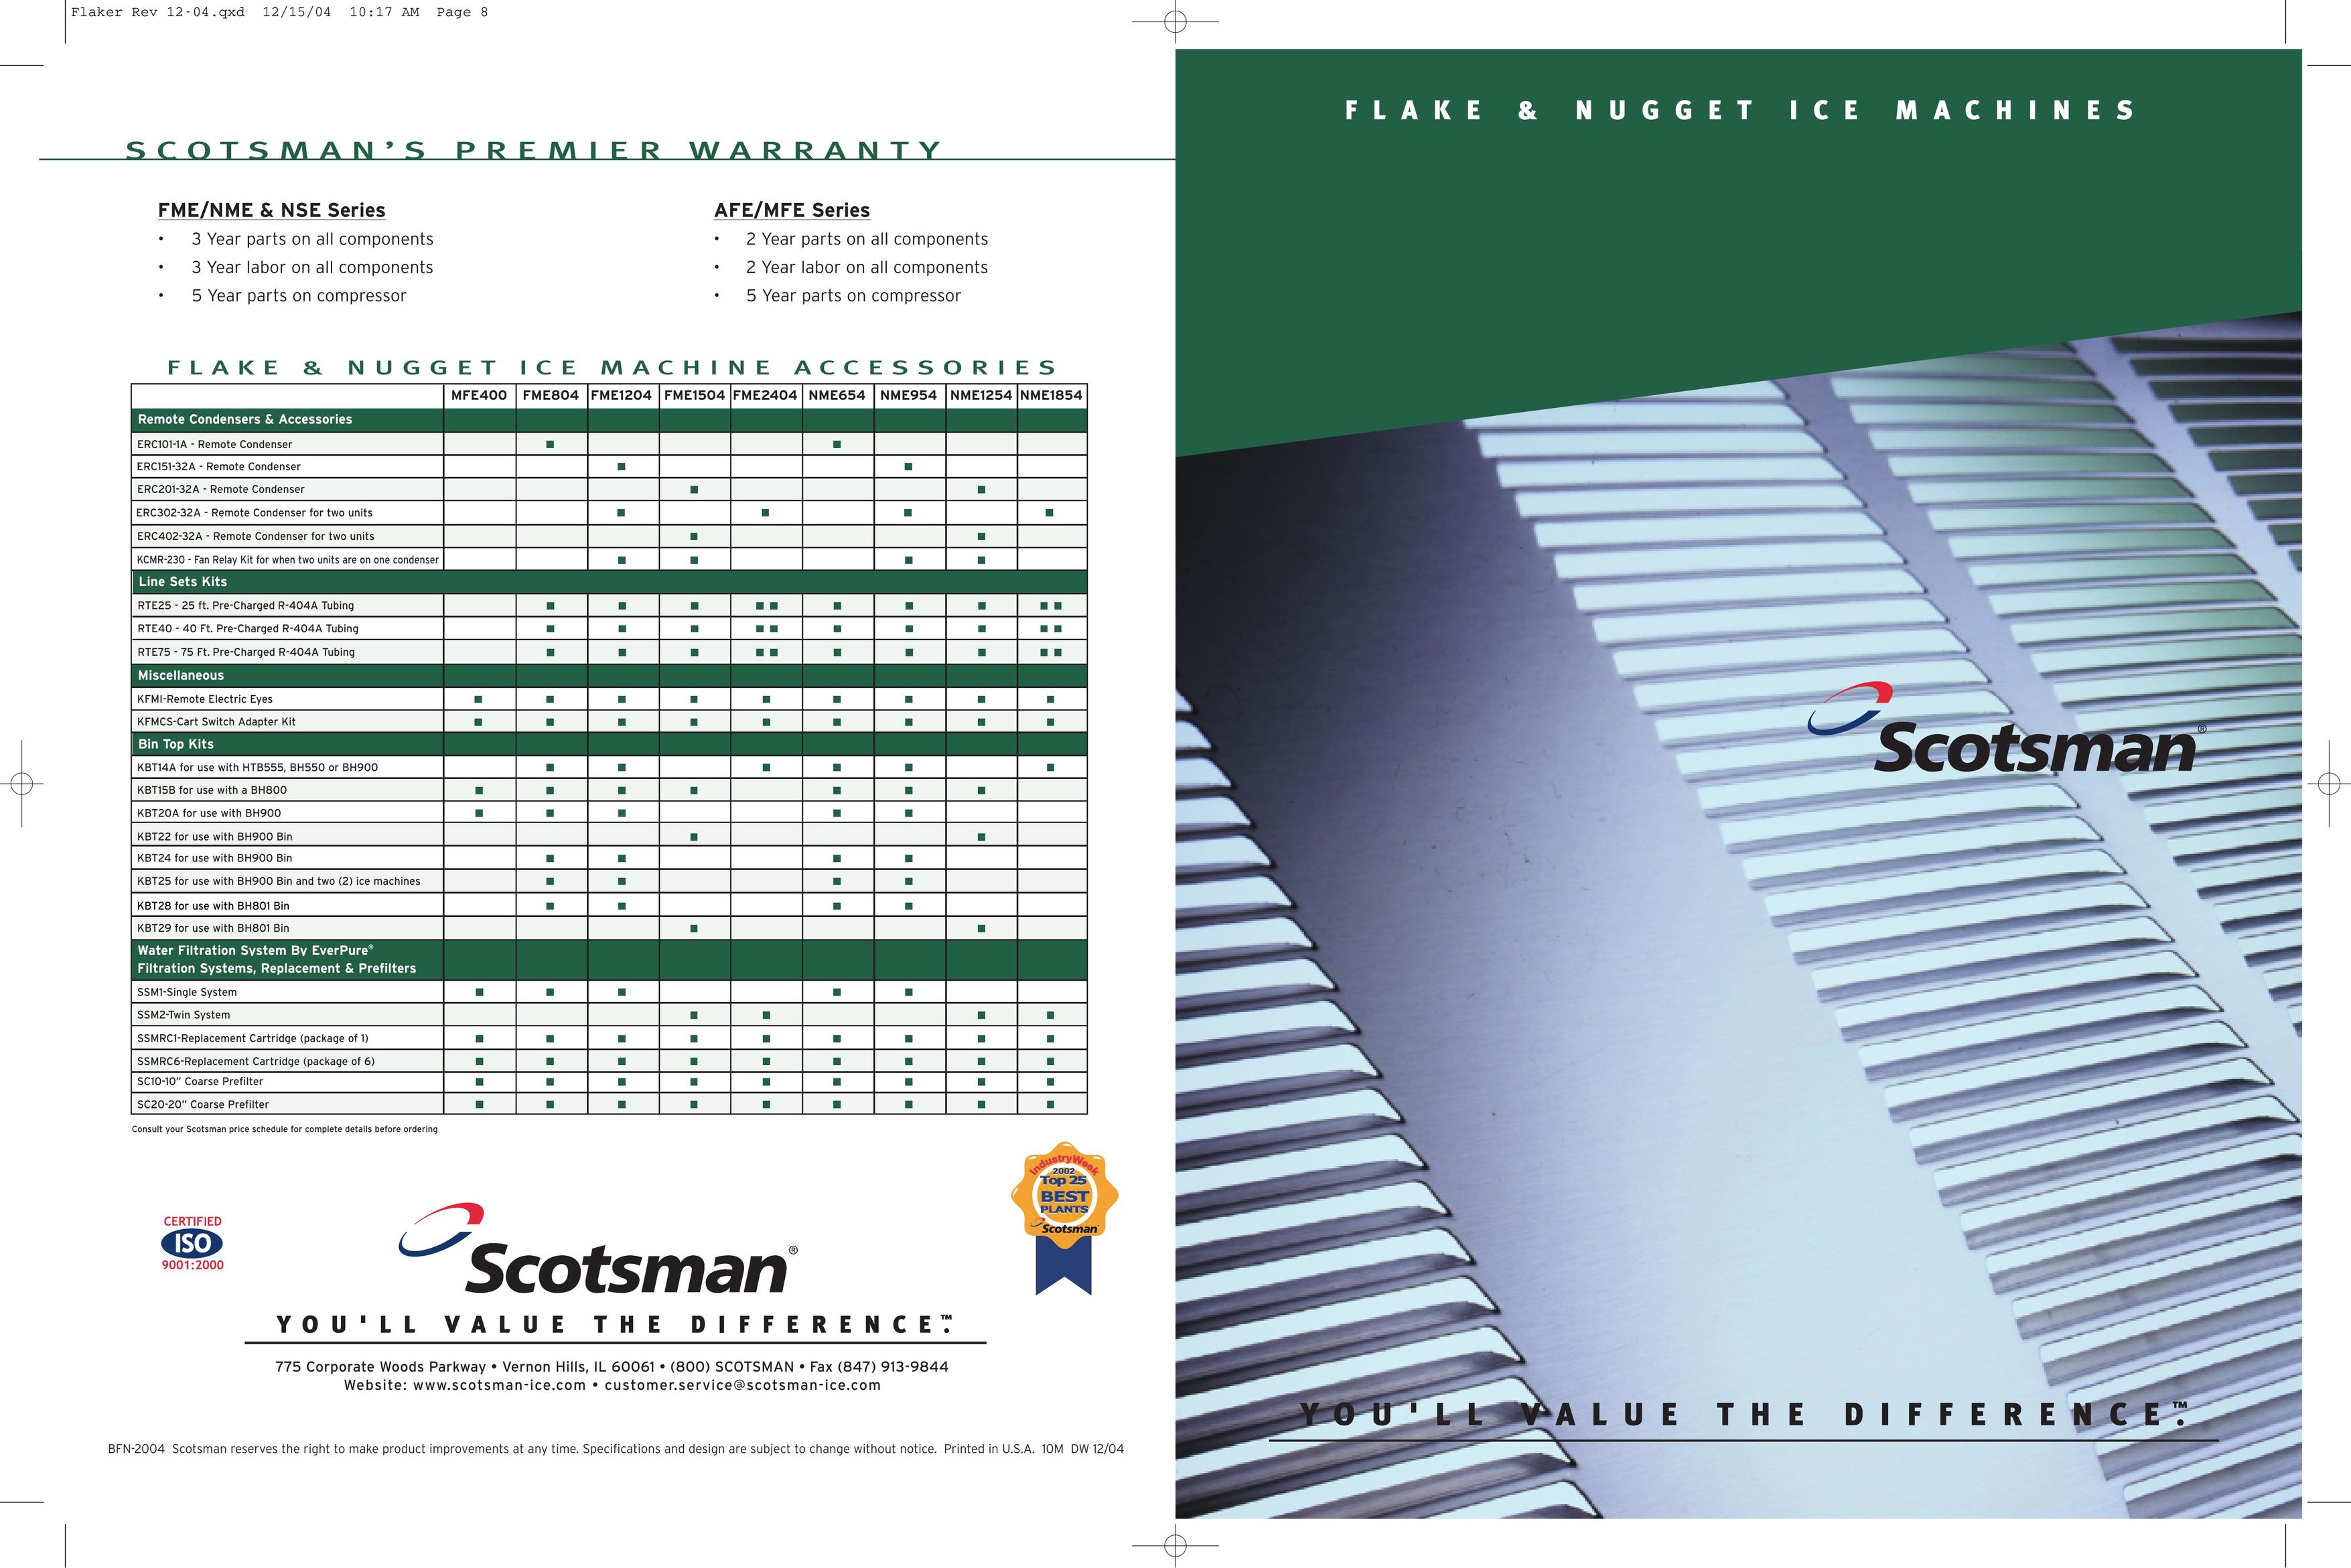 Scotsman Ice FME2404 Ice Maker User Manual